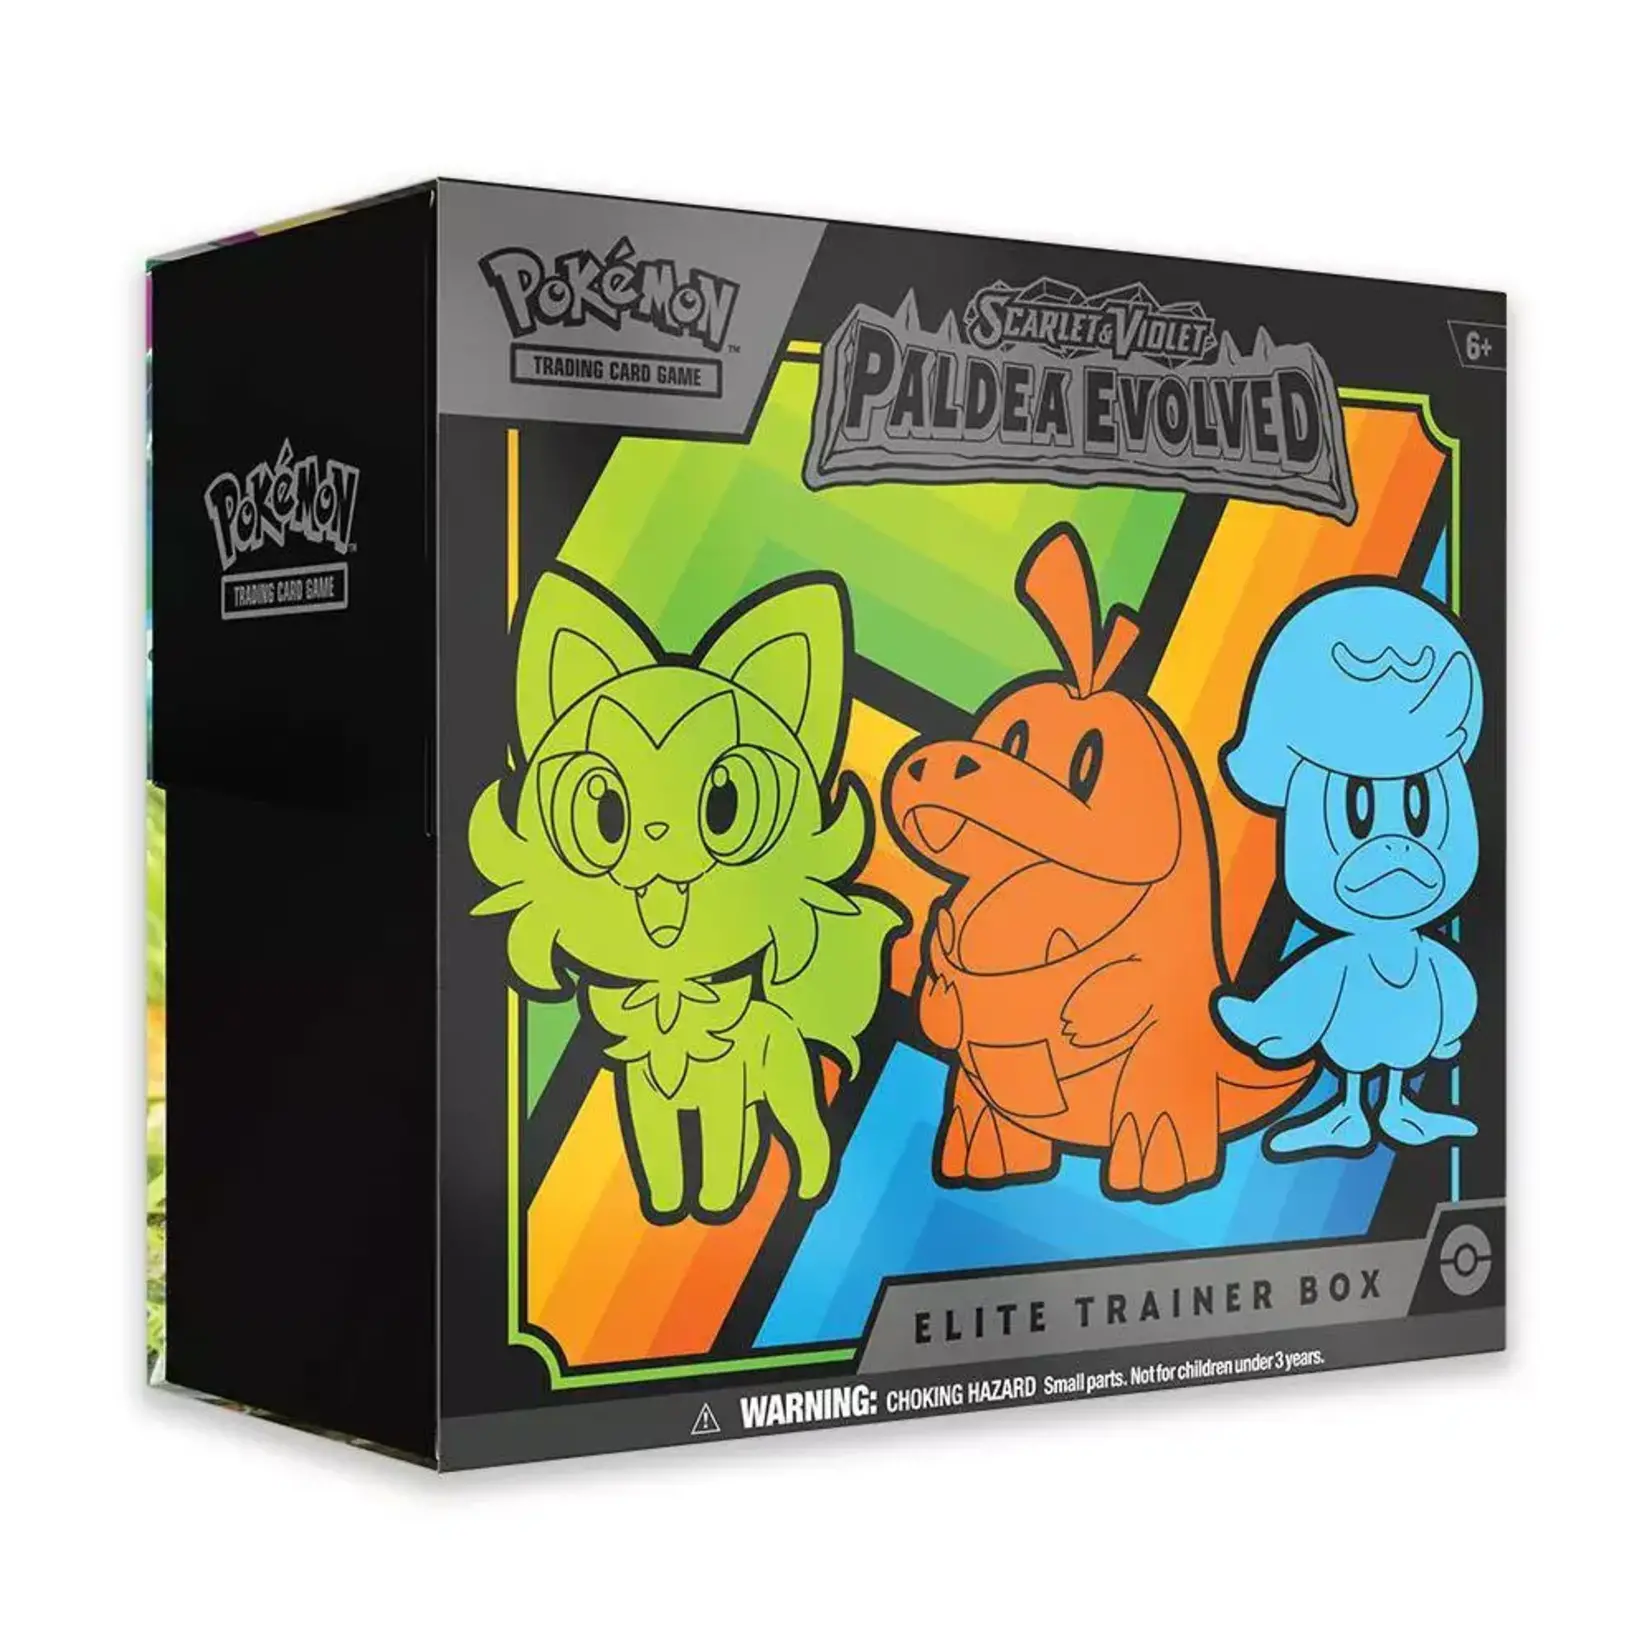 Pokémon Pokemon - Paldea Evolved Elite Trainer Box